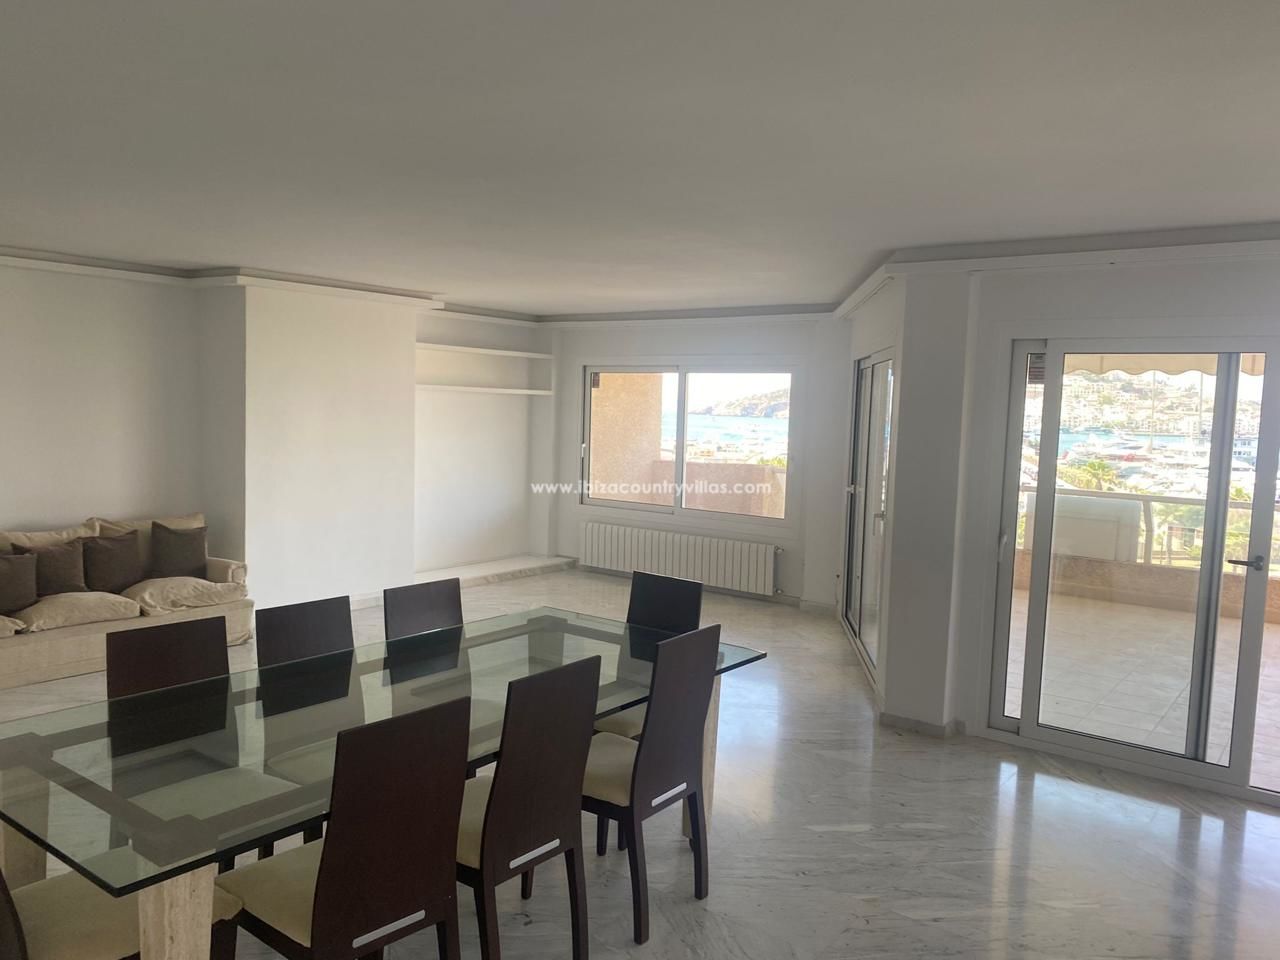 Spacious and bright apartment with panoramic views of Dalt Vila